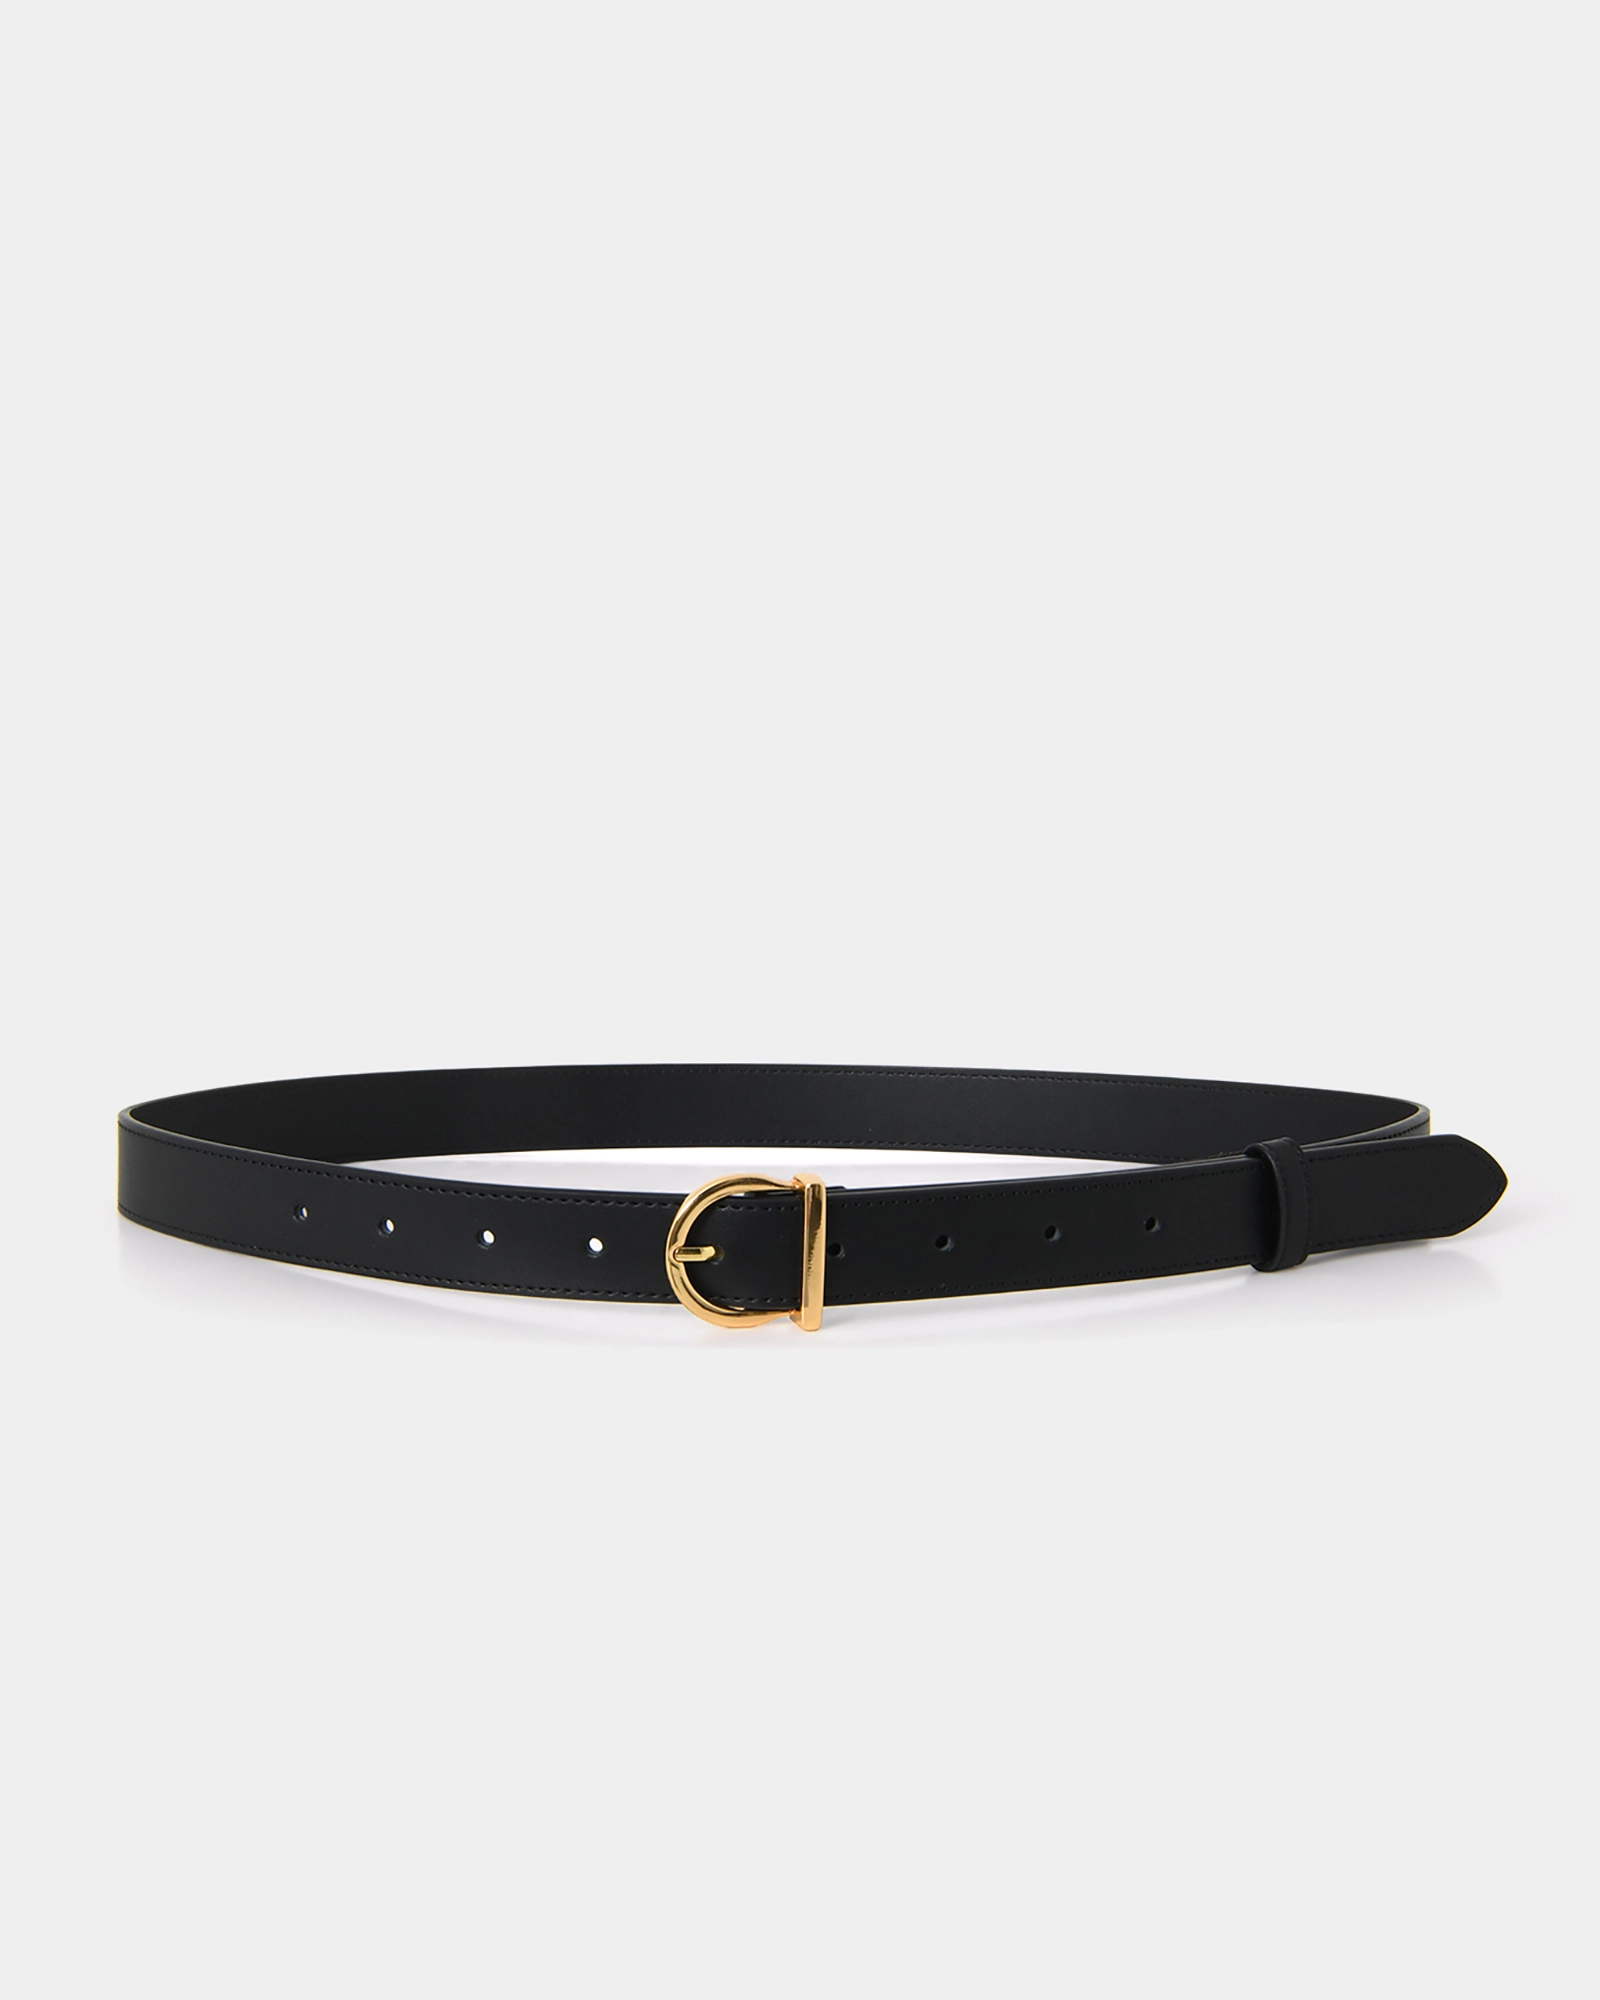 Morroco Leather Belt